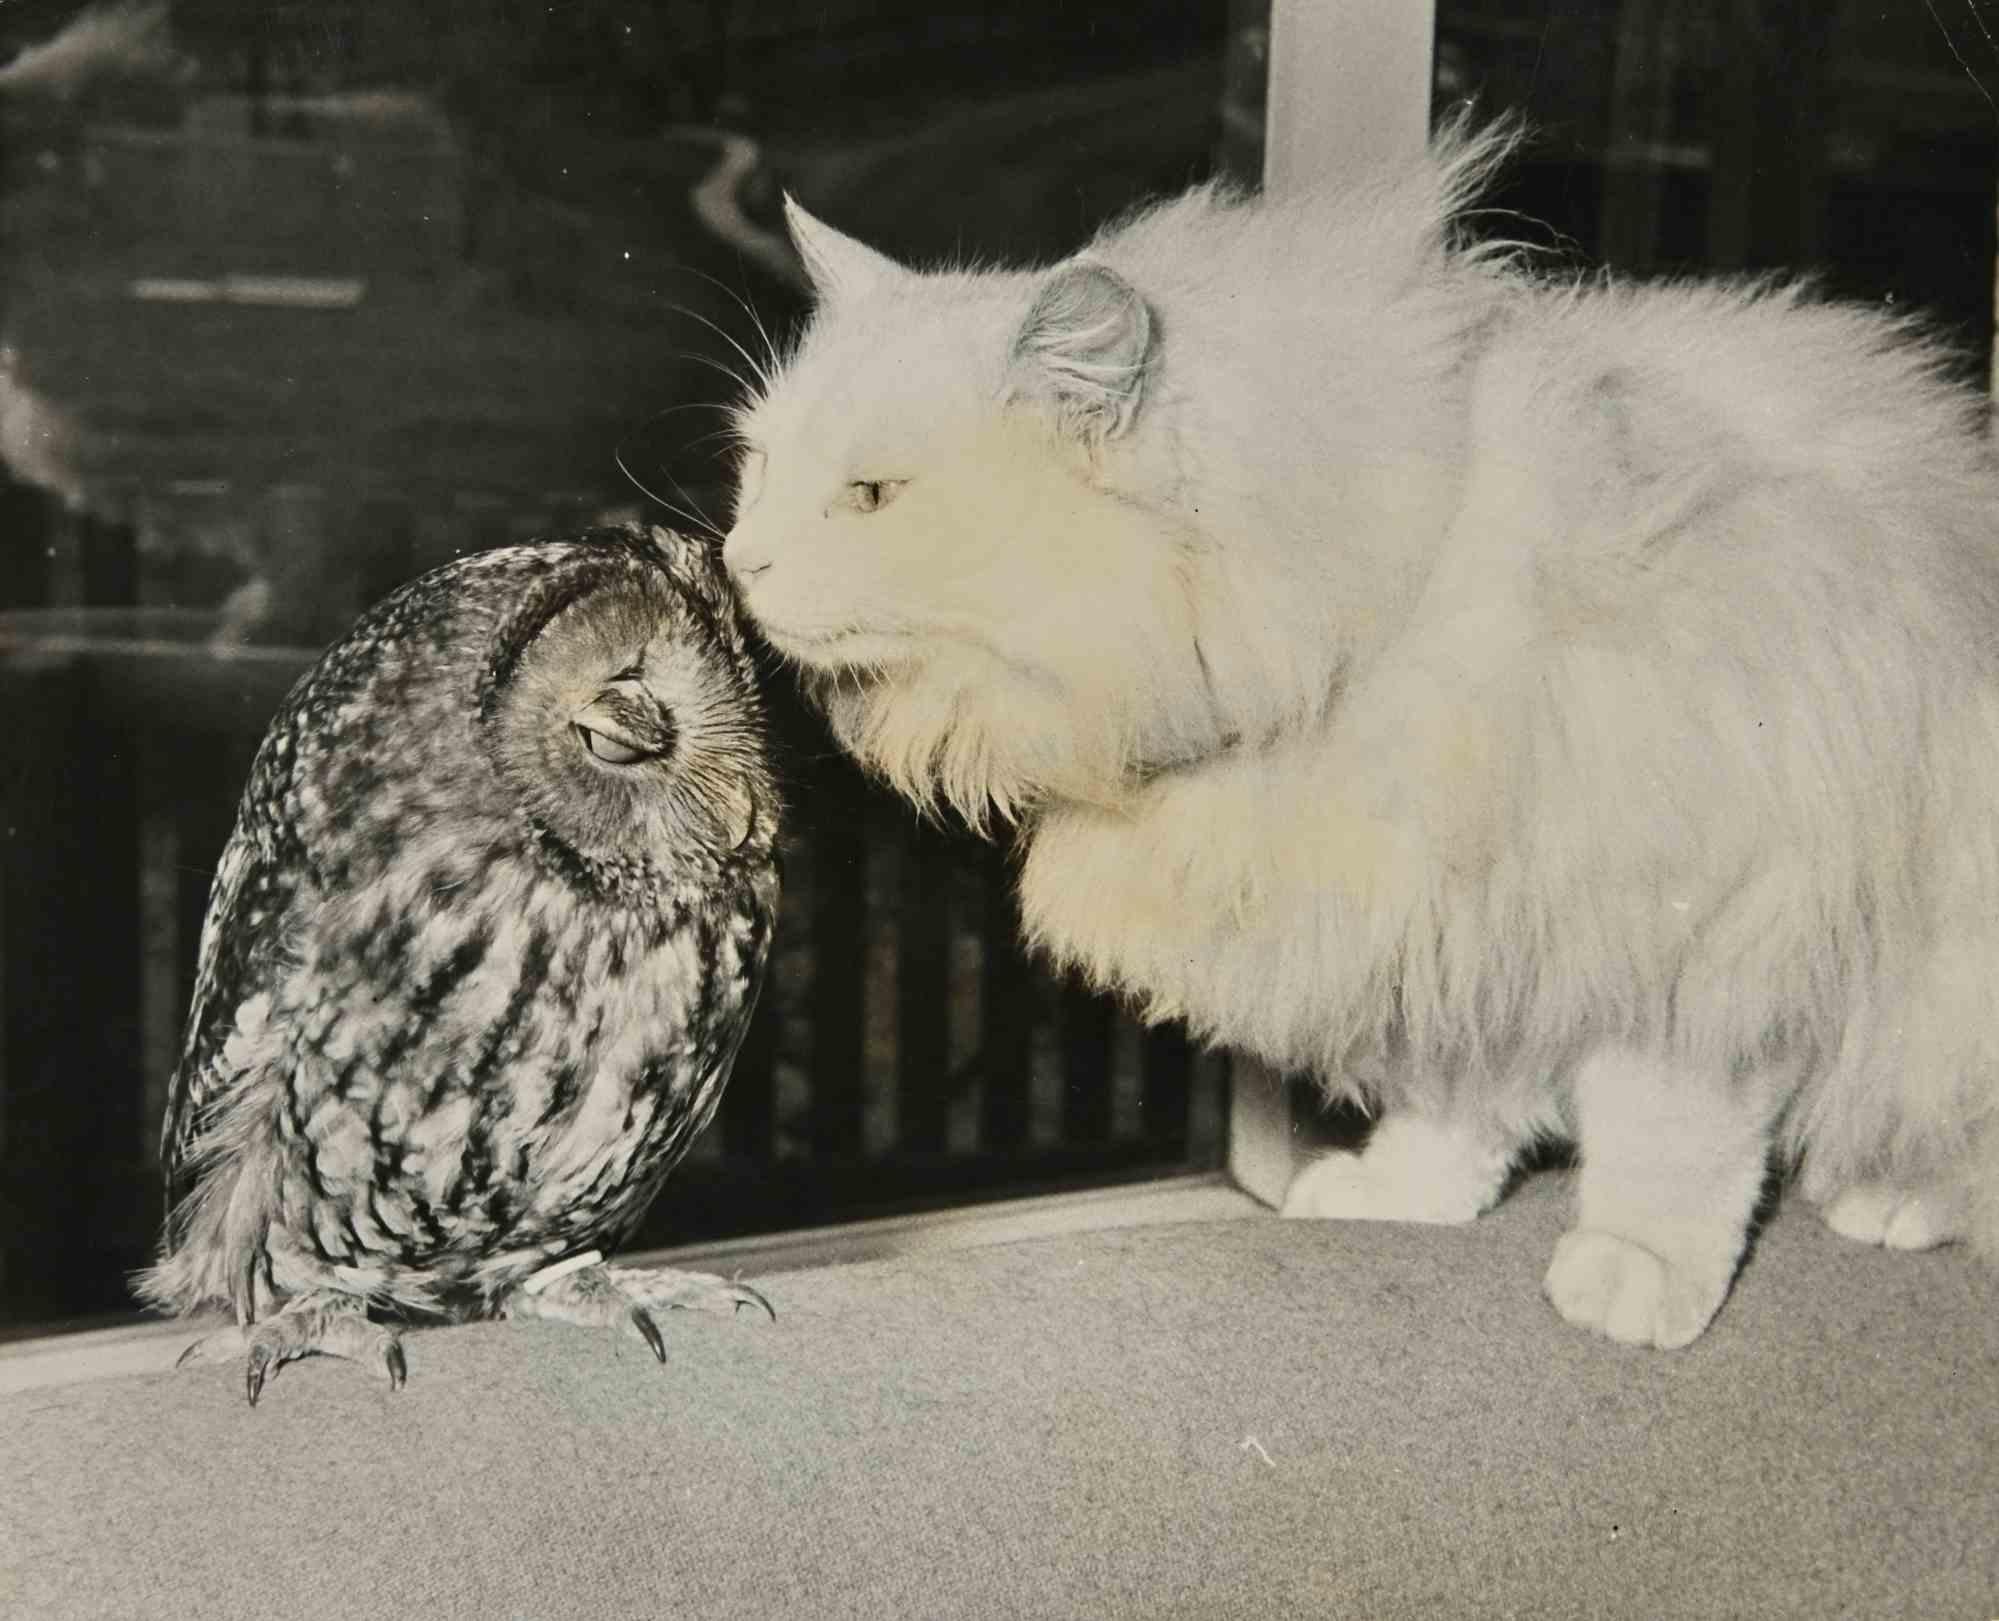 Unknown Figurative Photograph - Animals - Vintage Photograph - 1960s